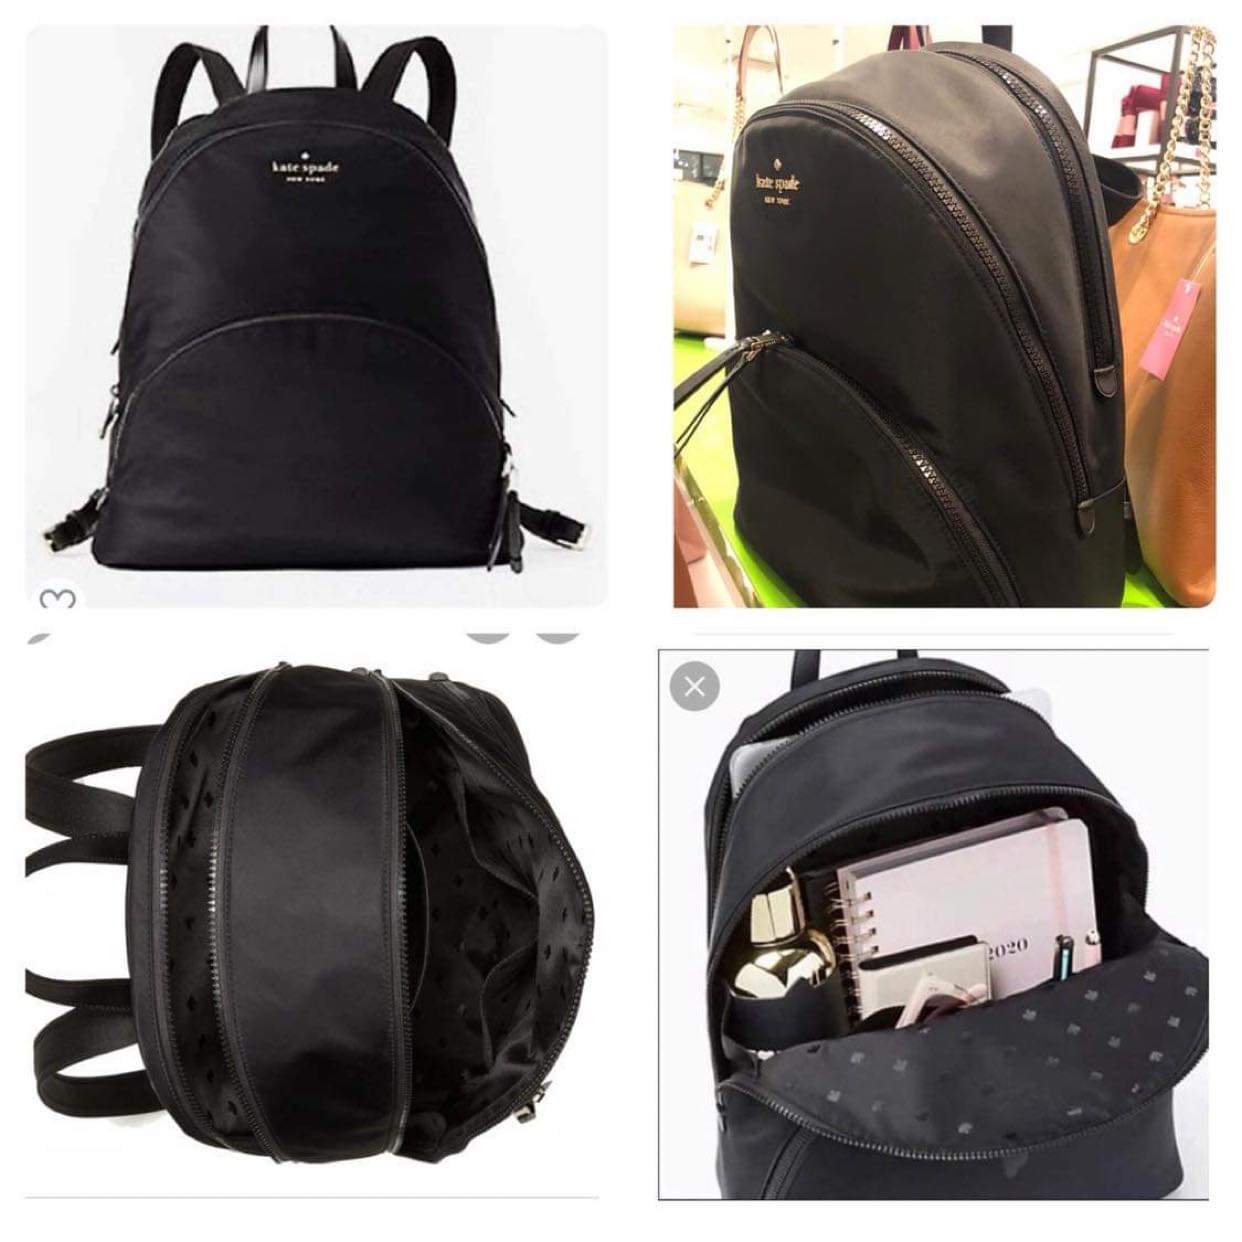 Original Brand New Kate Spade Karissa Nylon Large Backpack Bag in Black  Size: L: 11